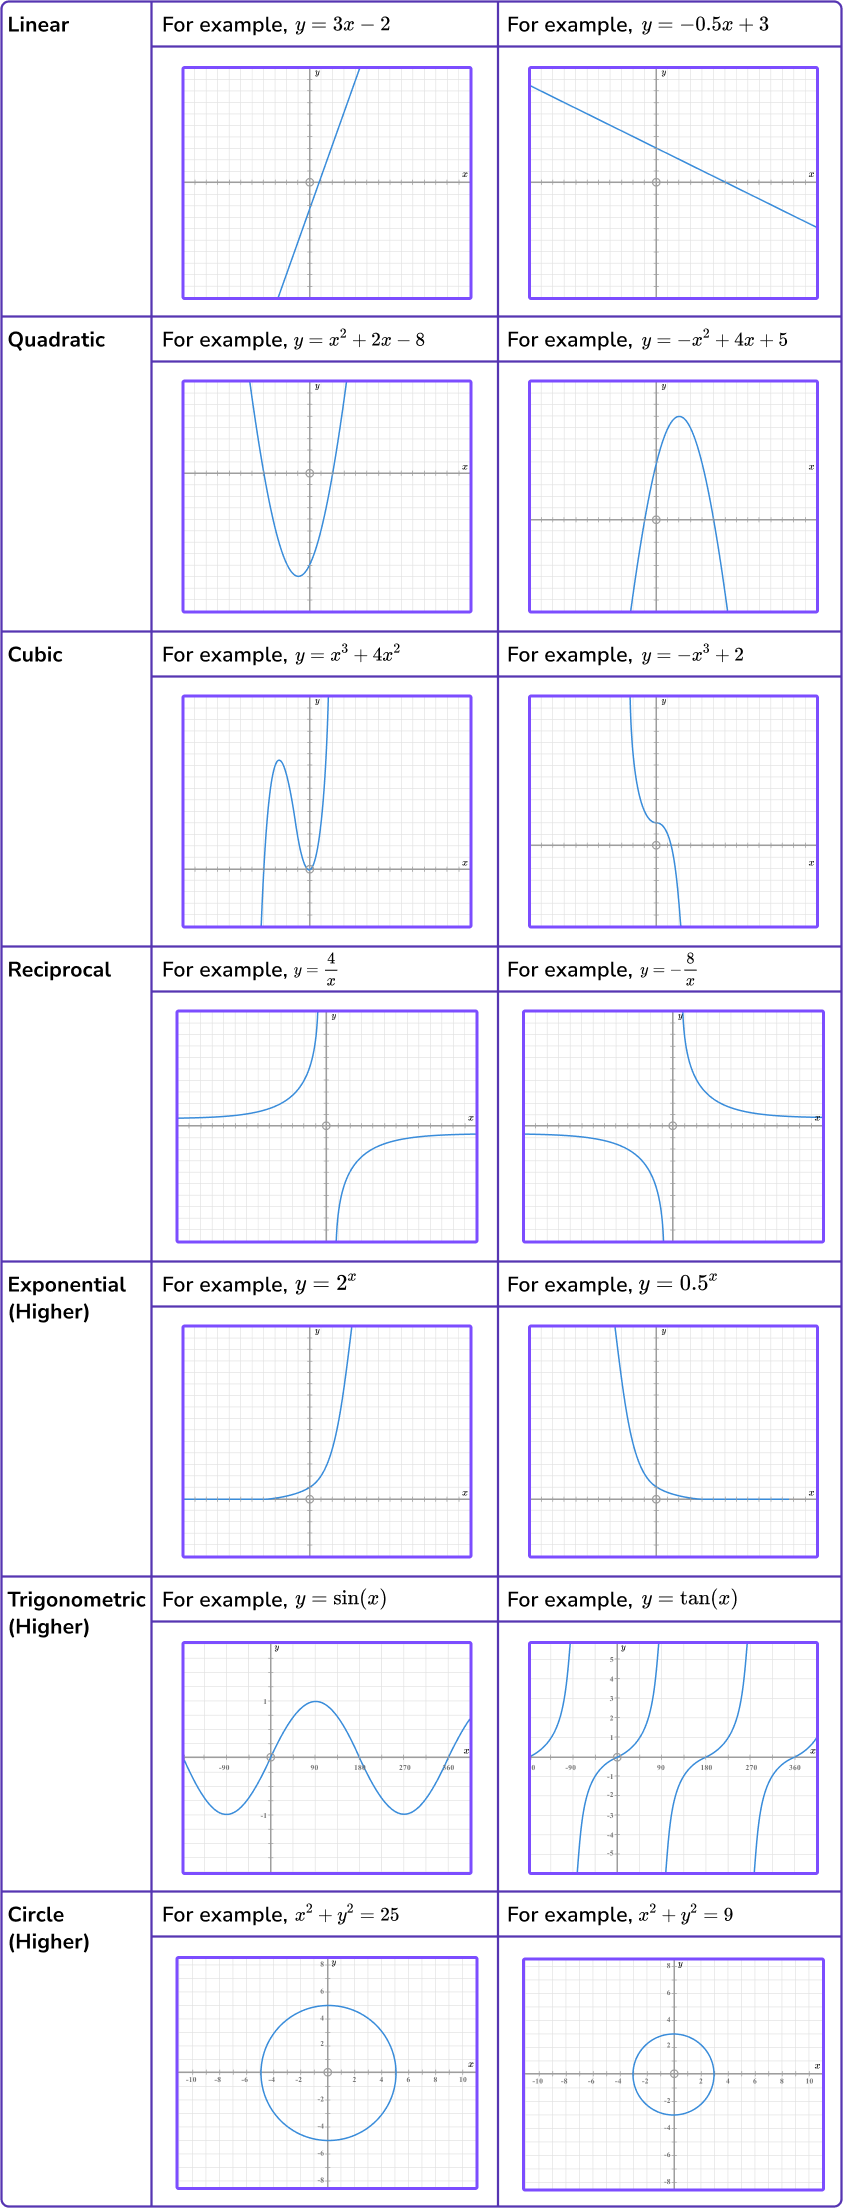 Interpreting Graphs image 1.1